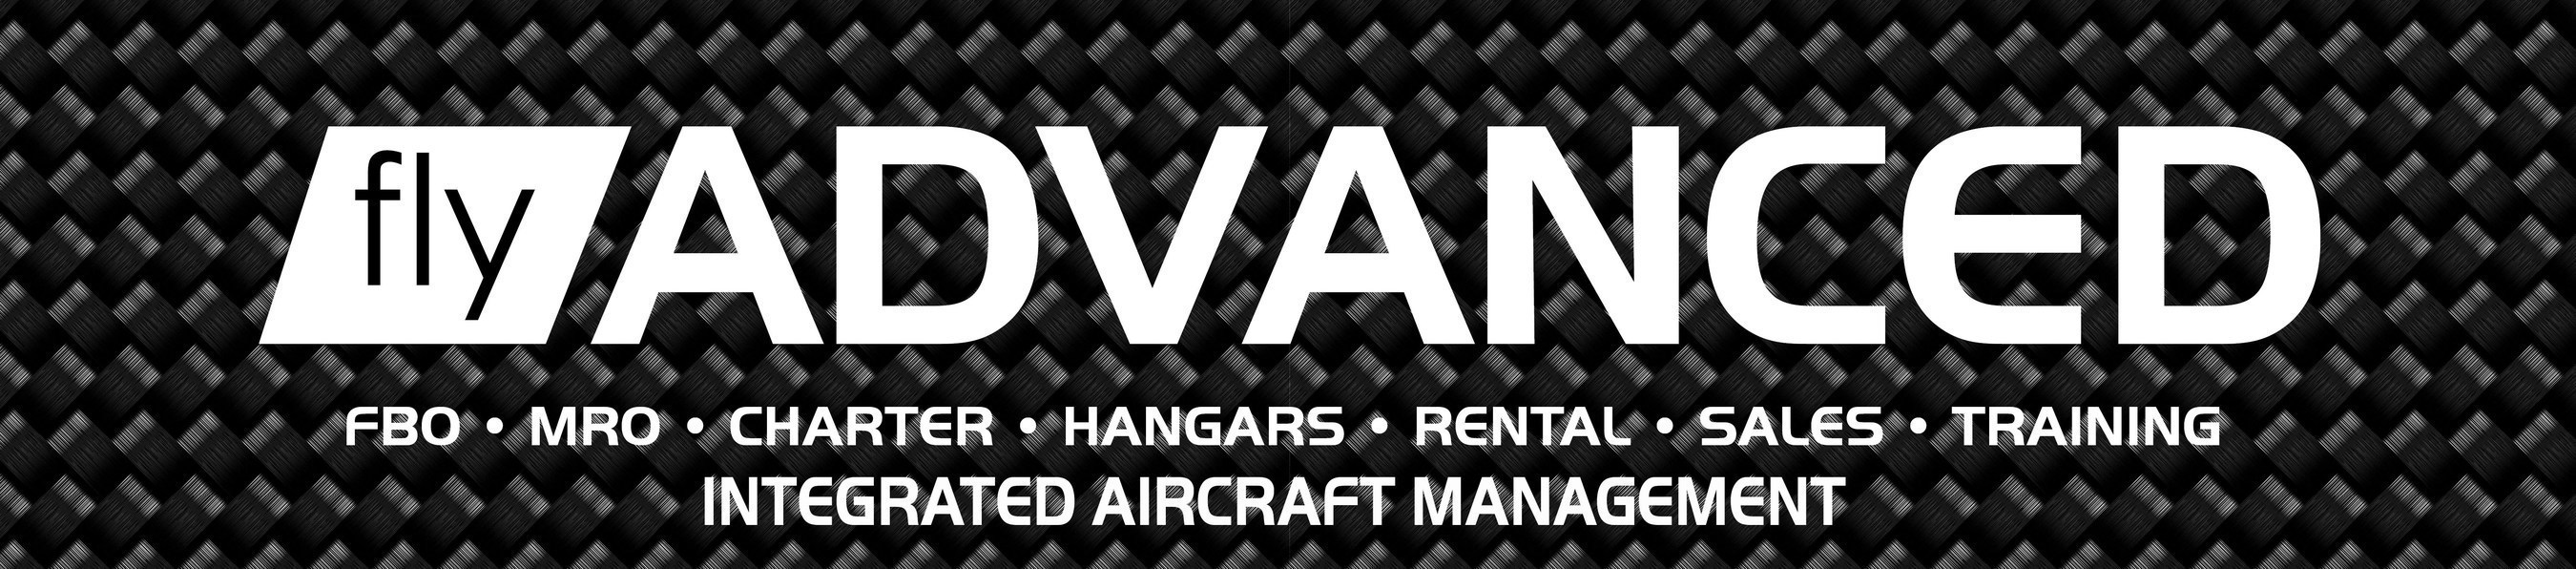 flyADVANCED logo